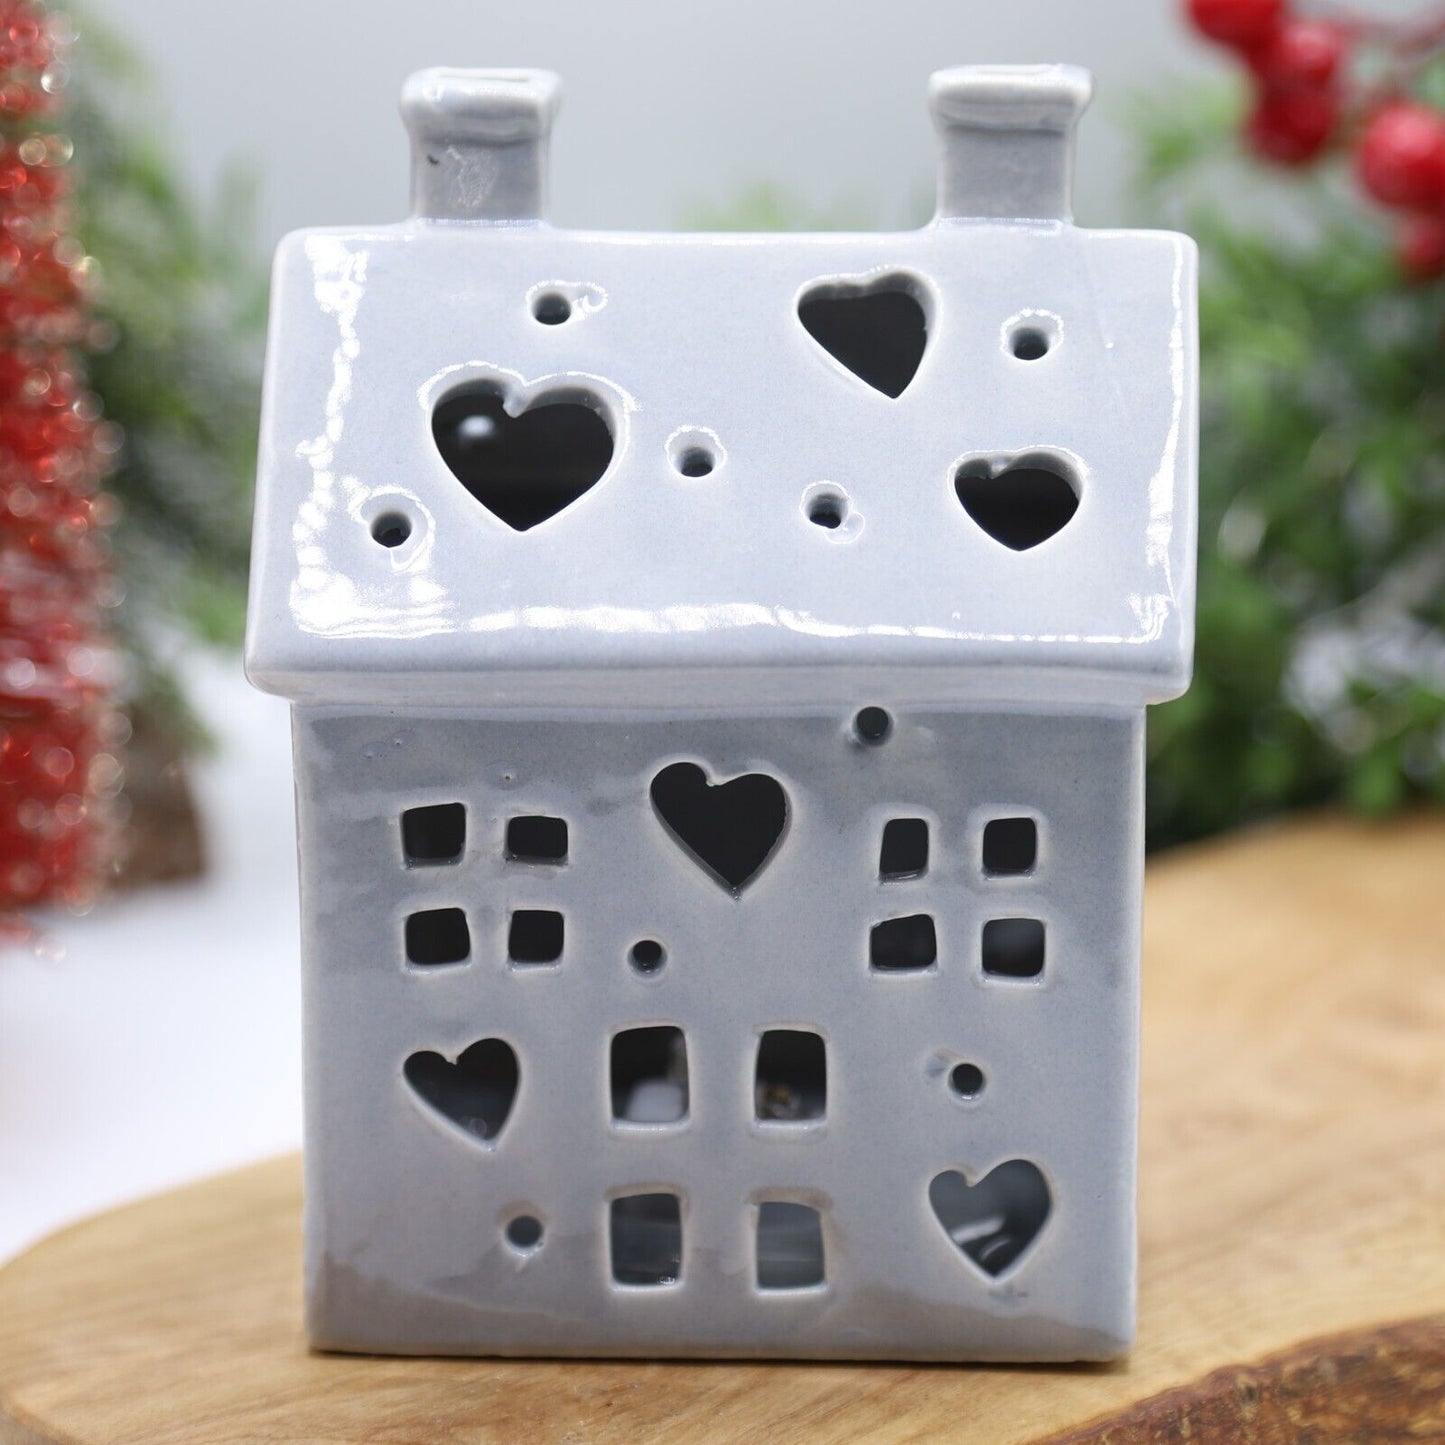 Christmas Ceramic Grey House Shaped Home Tealight Candle Holder Festive Decor